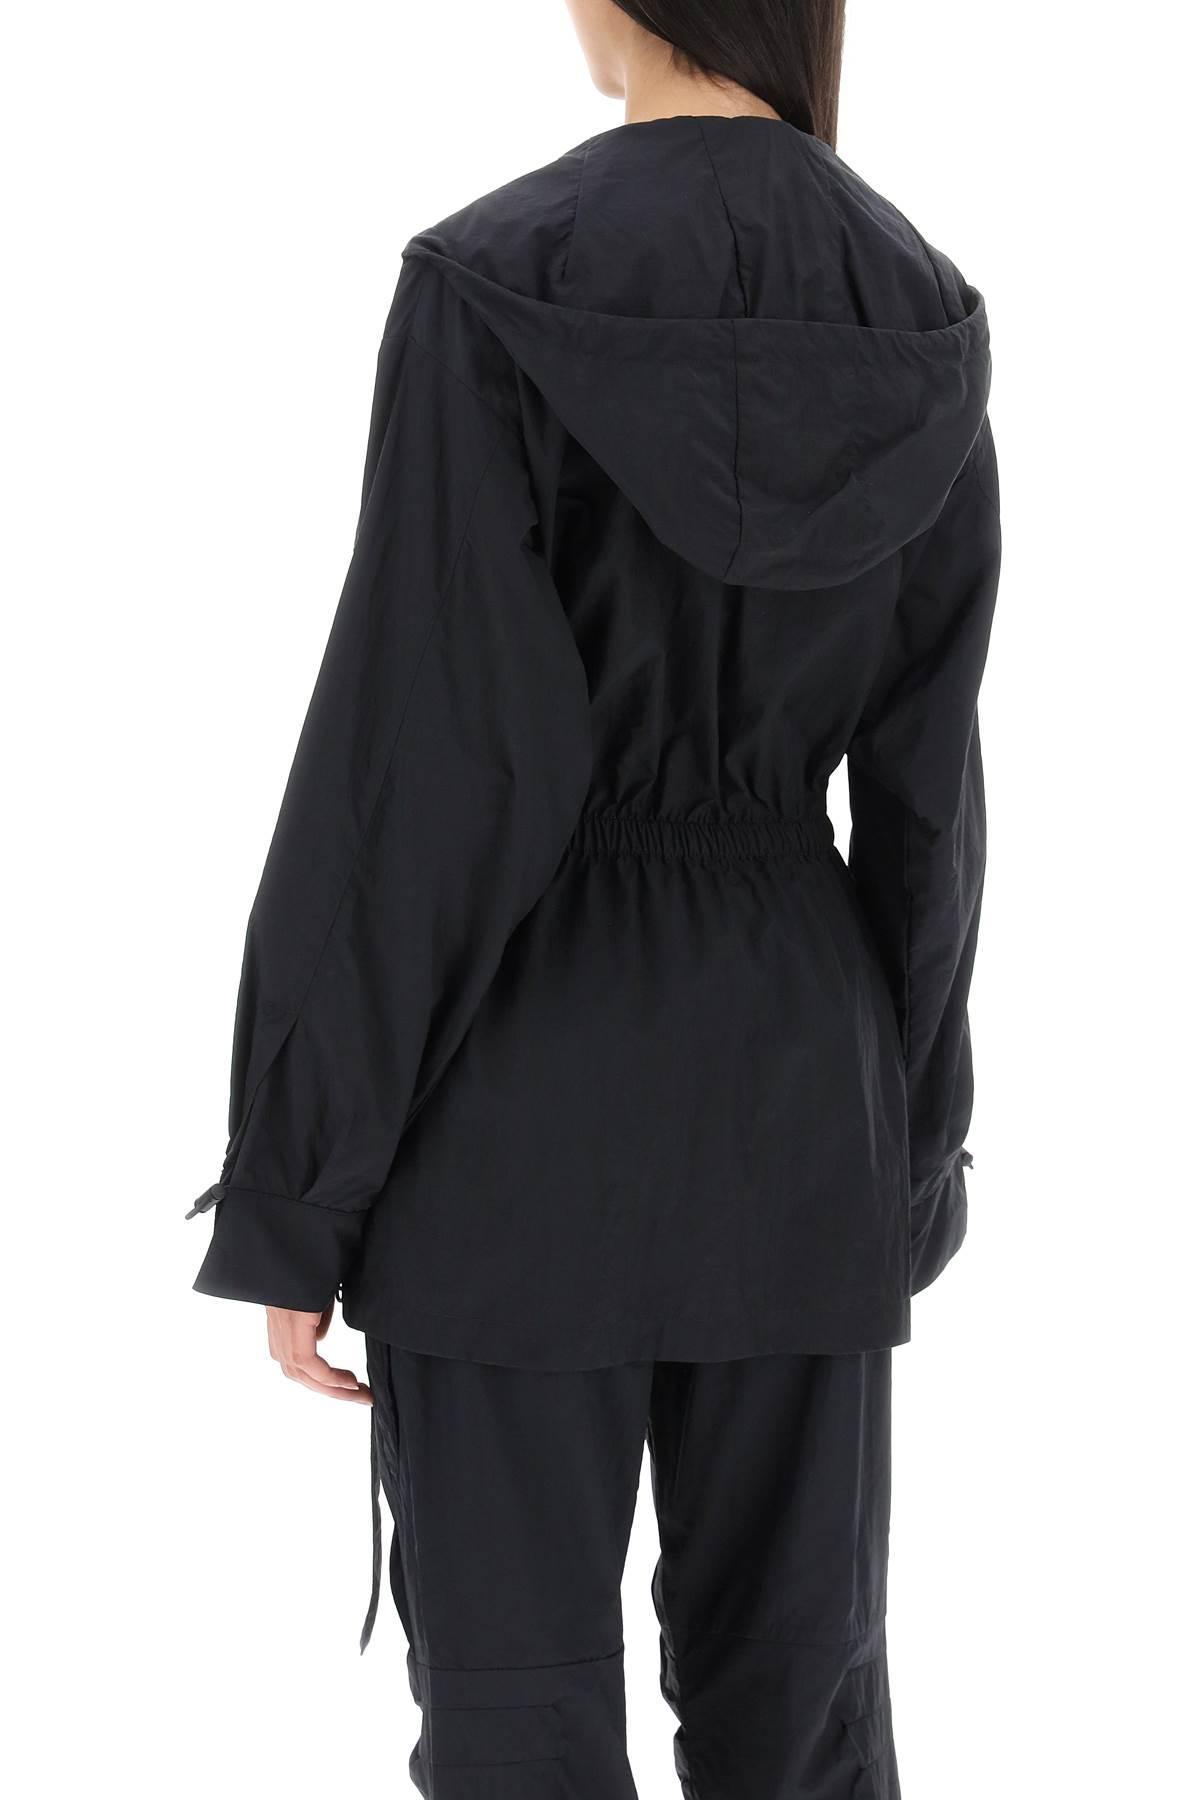 Fendi Nylon Anorak Jacket in Black | Lyst